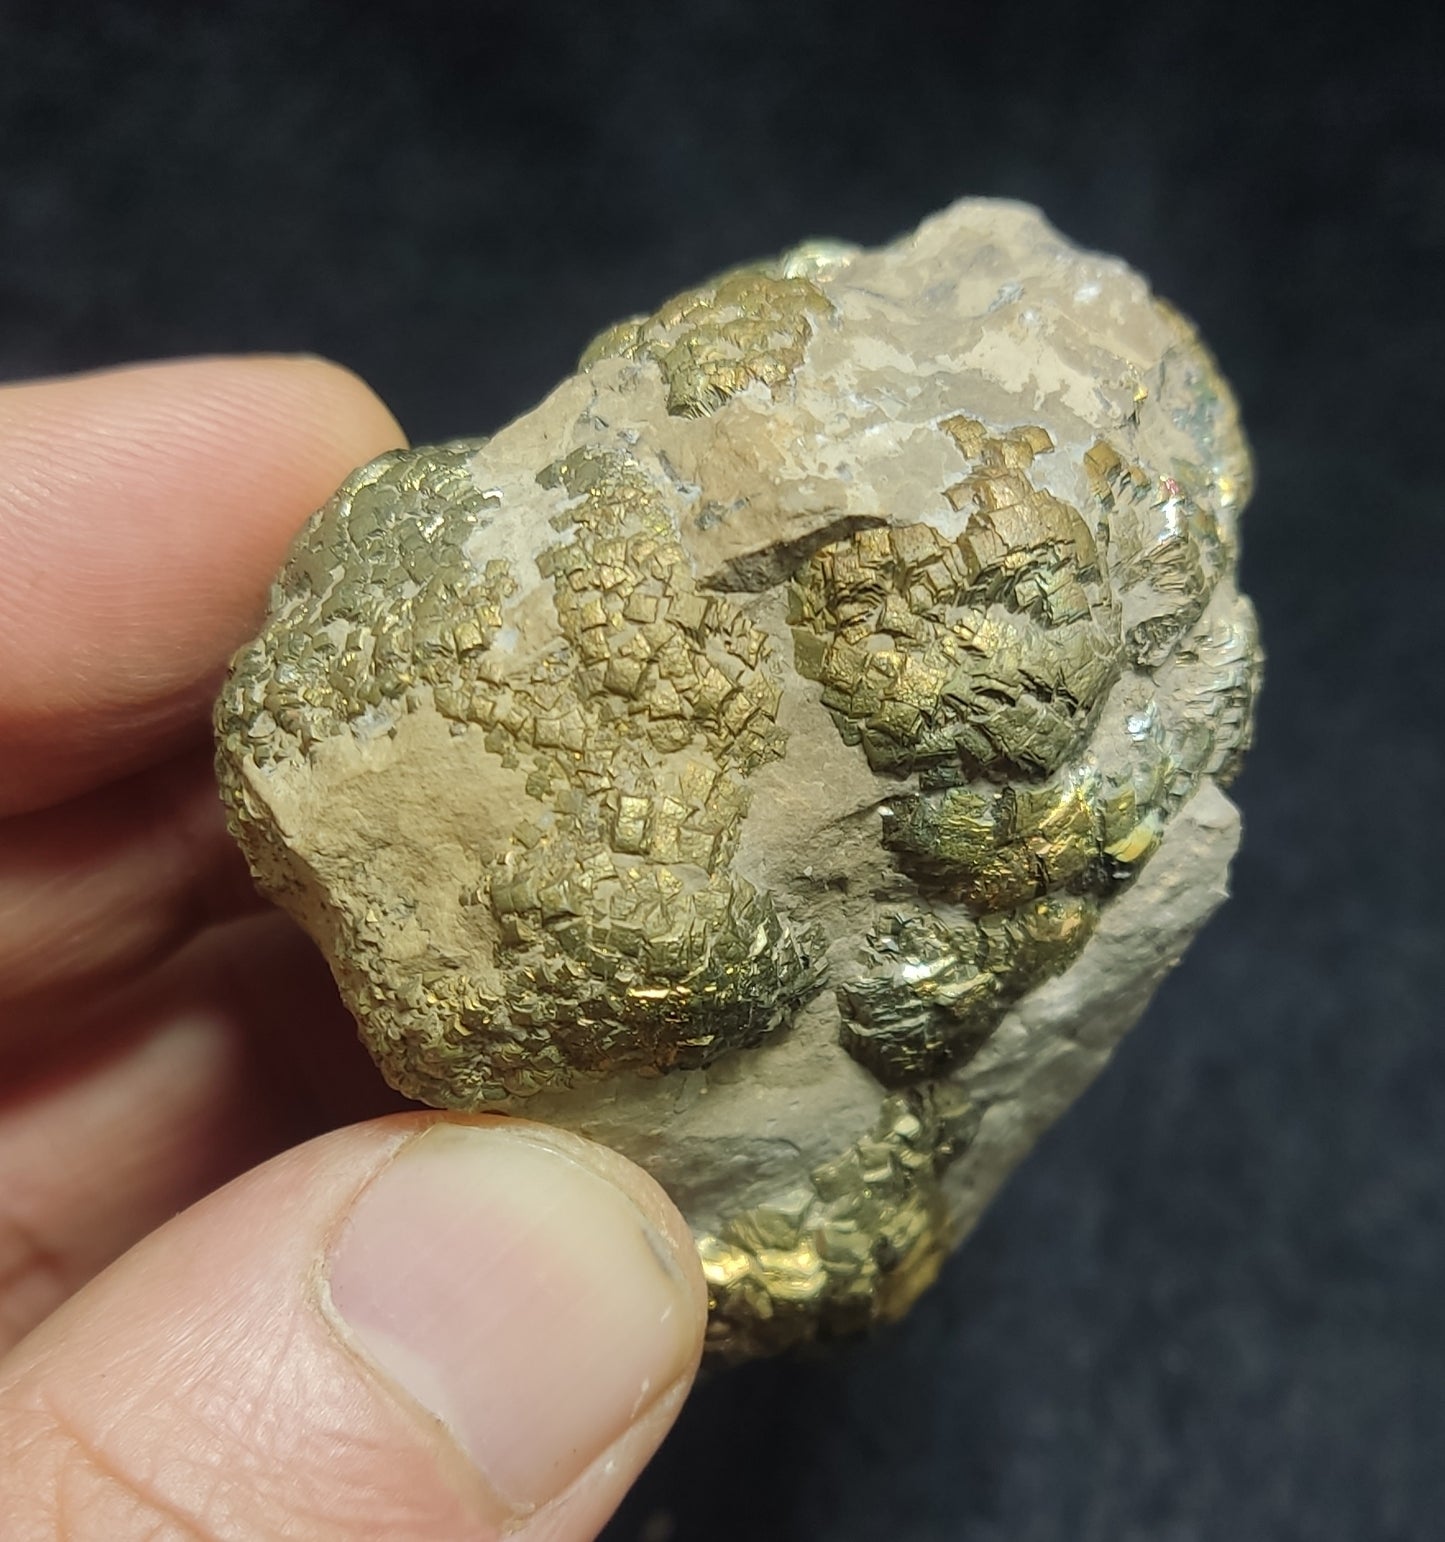 pyrite/marcasite 243 grams